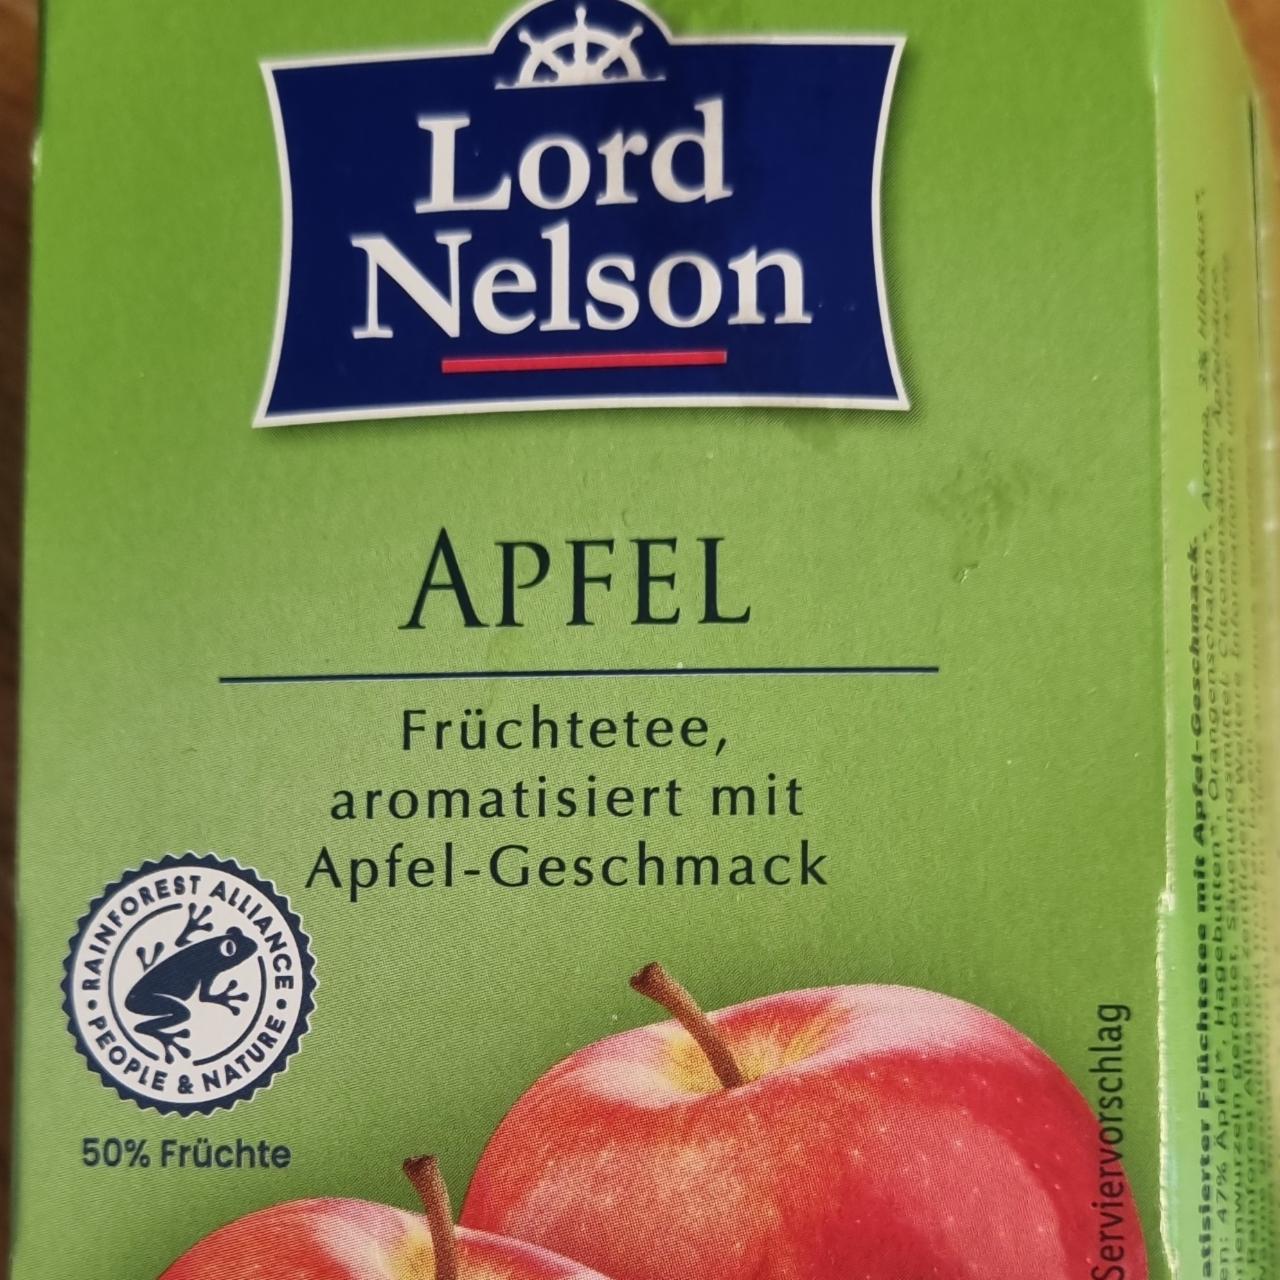 Fotografie - Apfel Früchtetee Lord Nelson